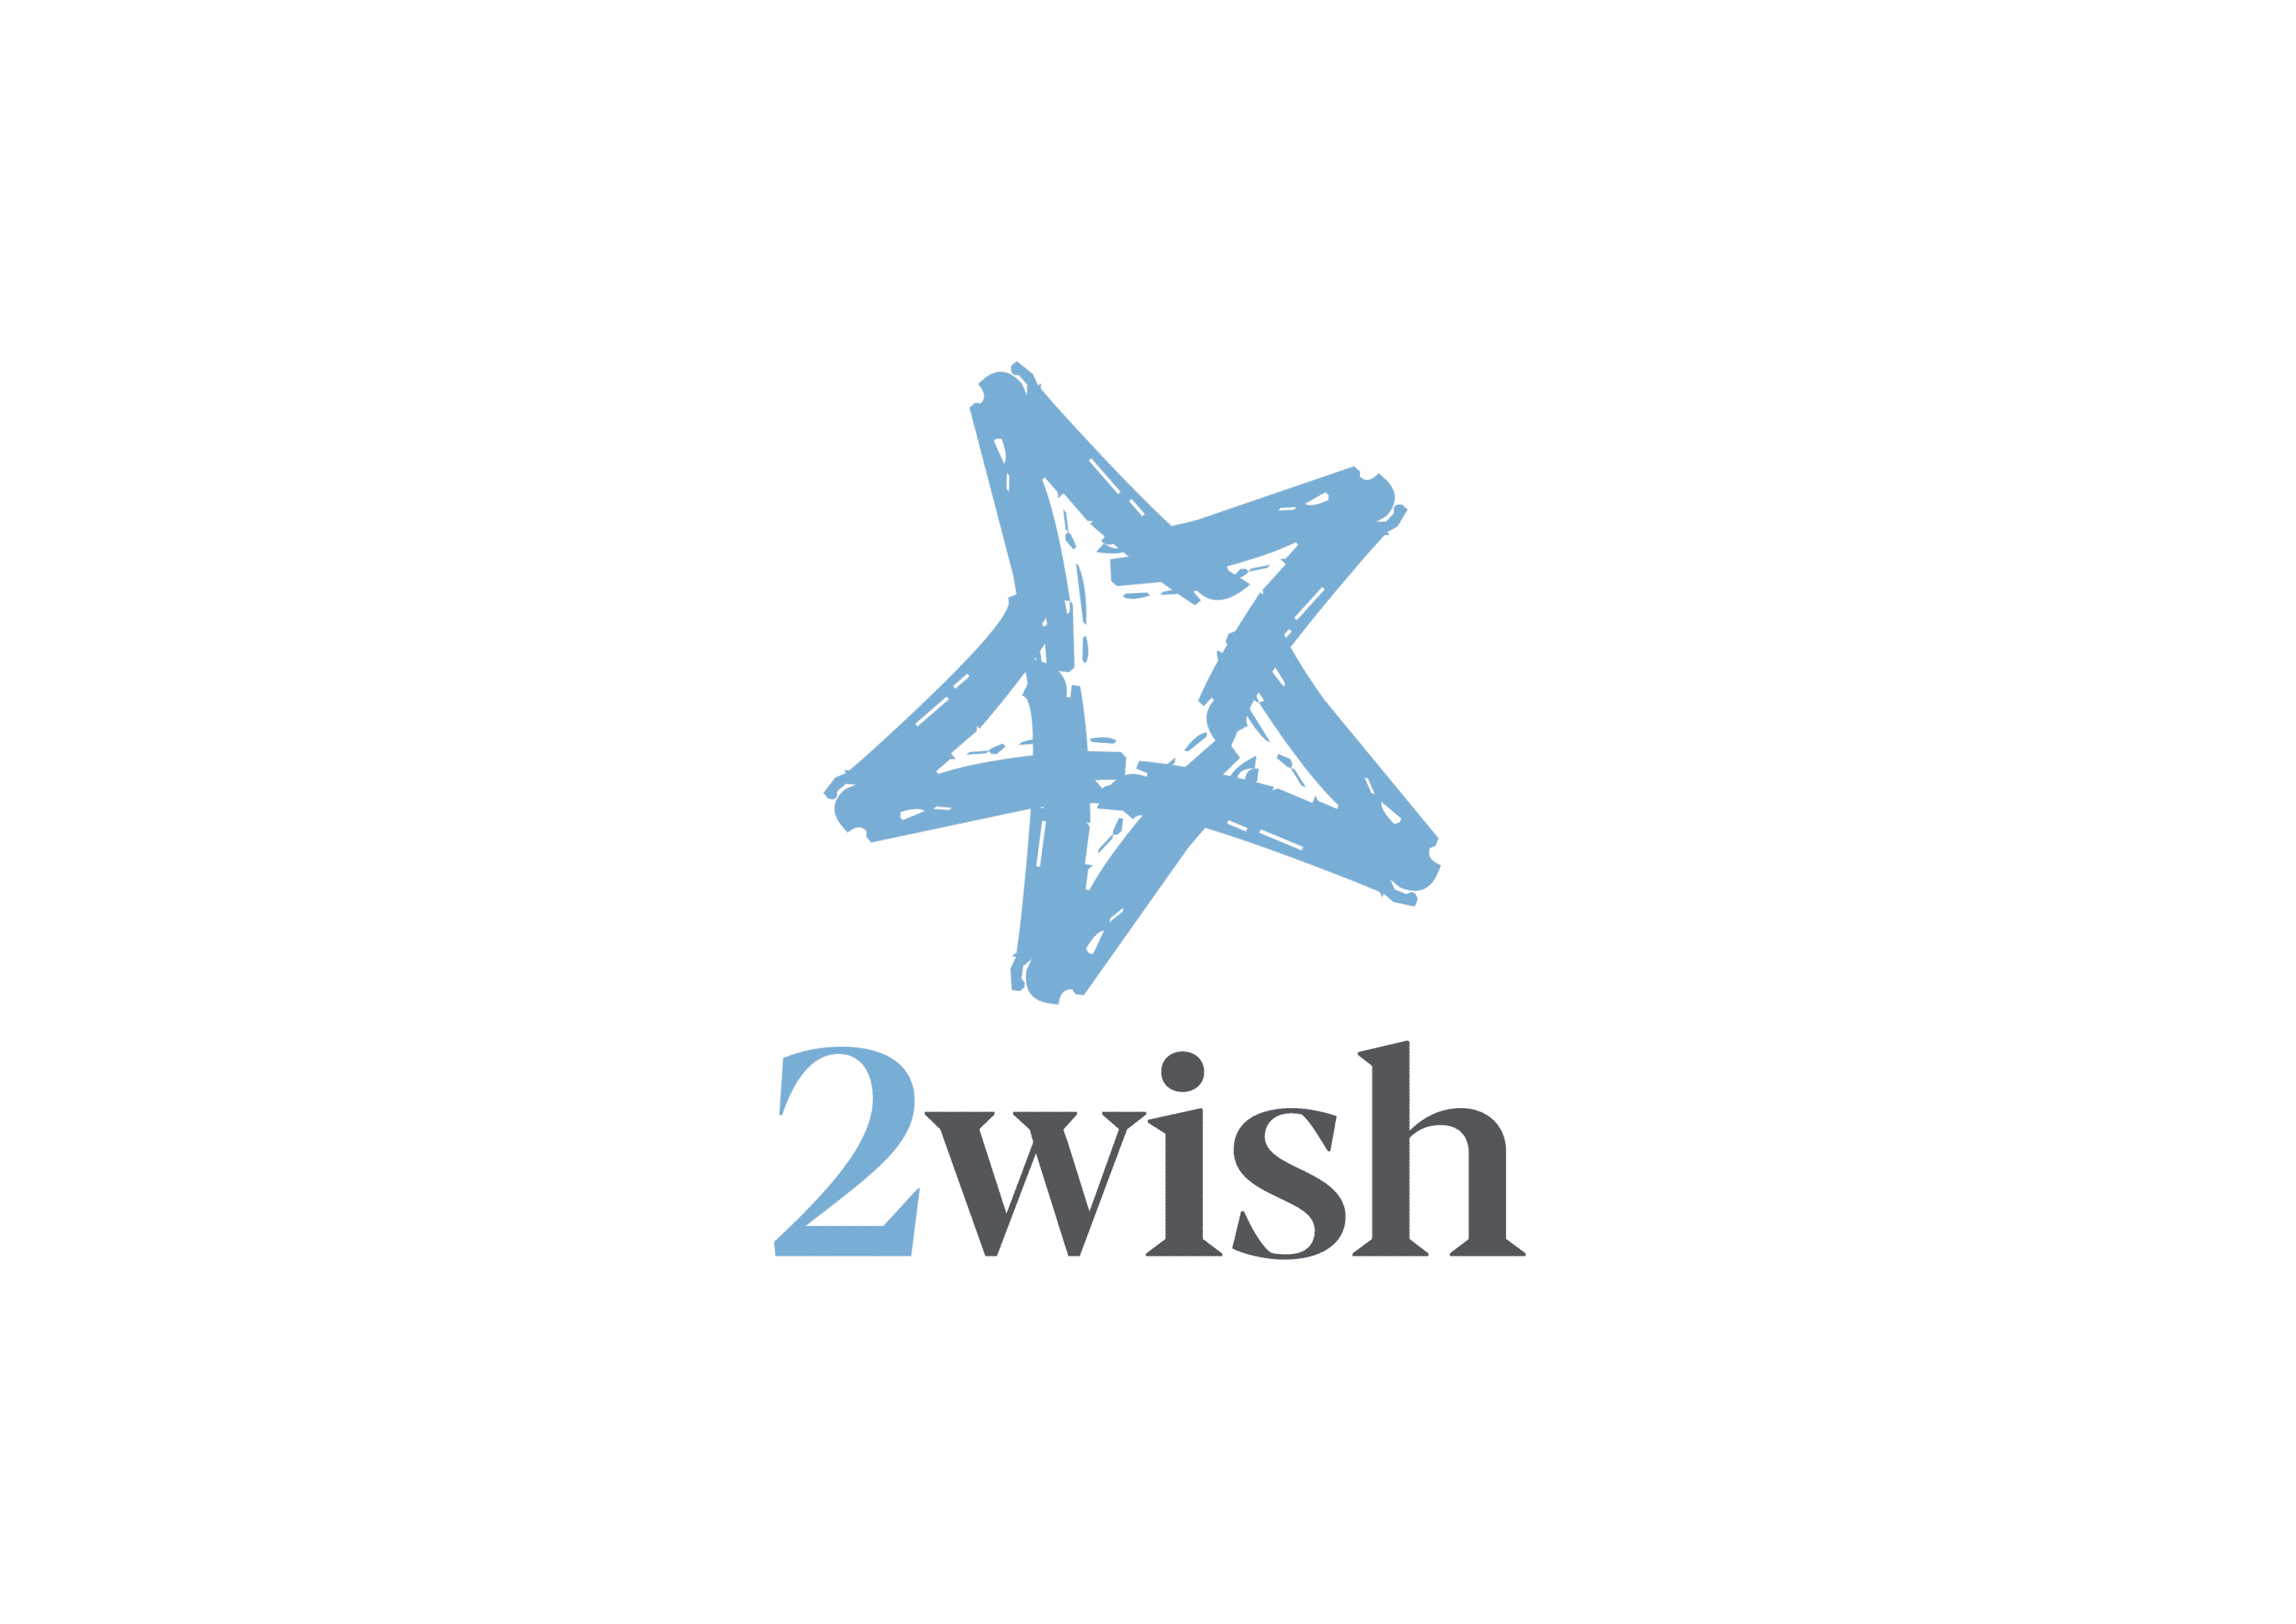 2-wish-logos-01